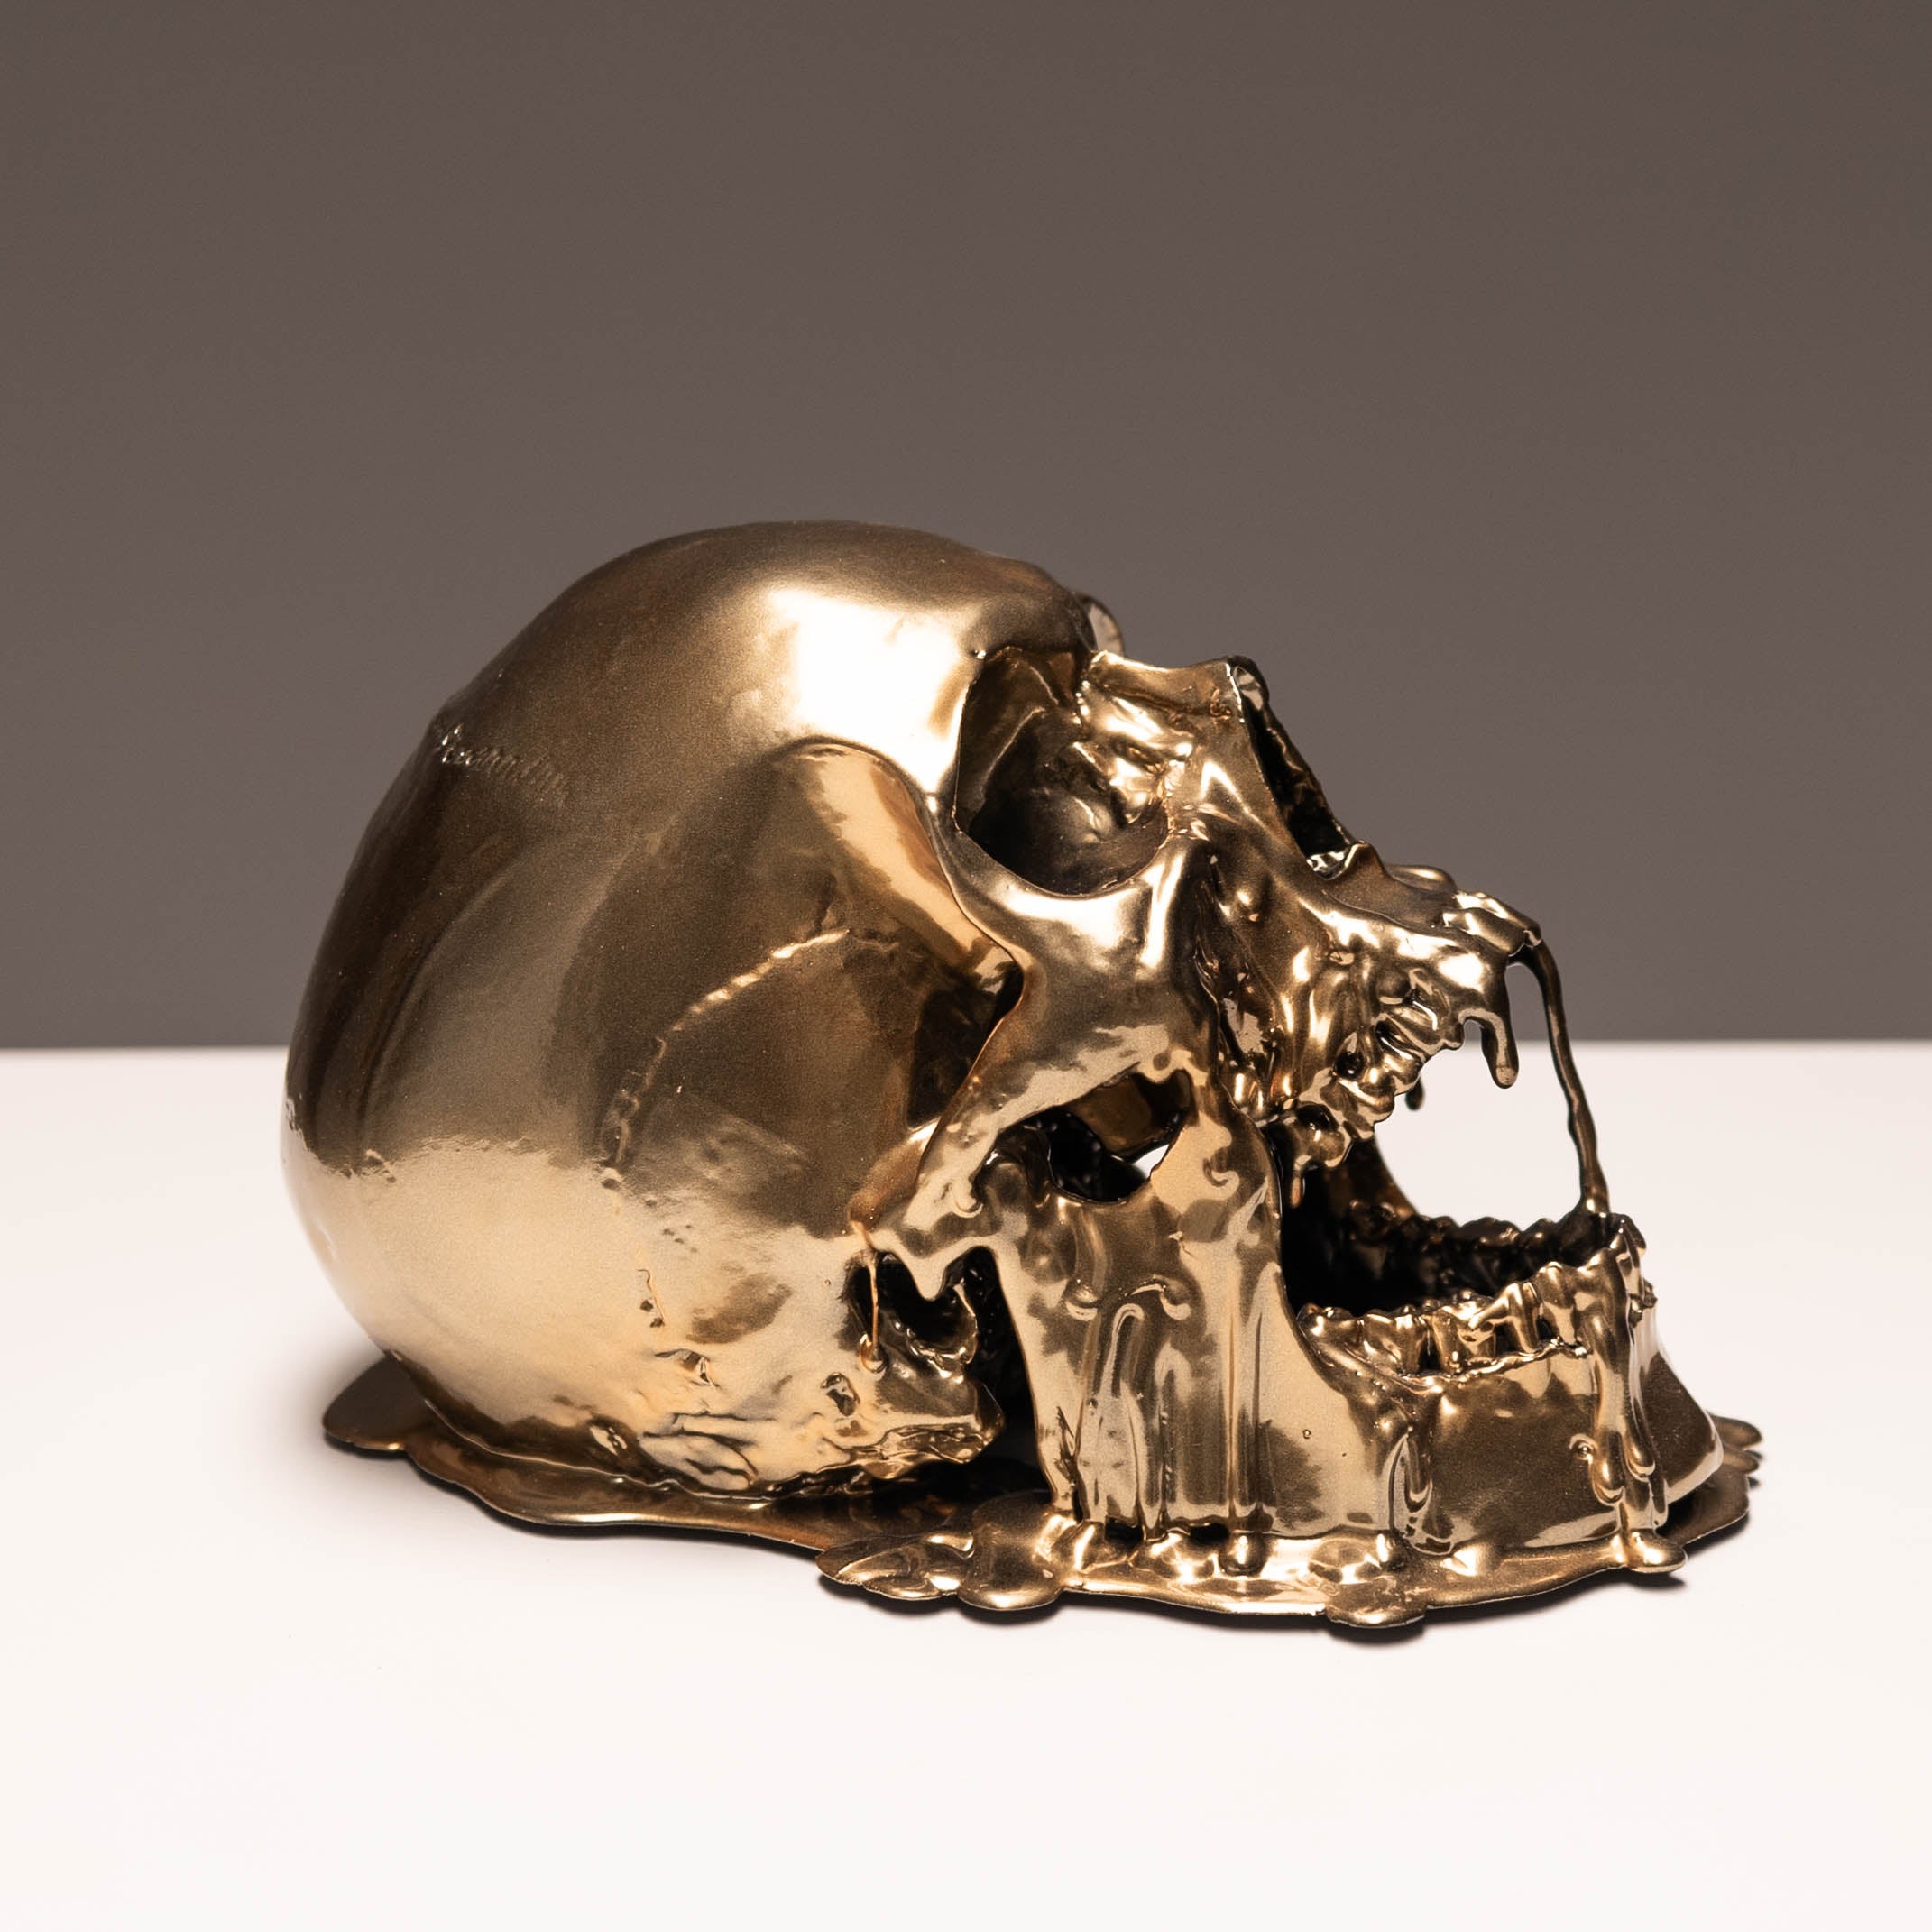 Melting Gold Skull